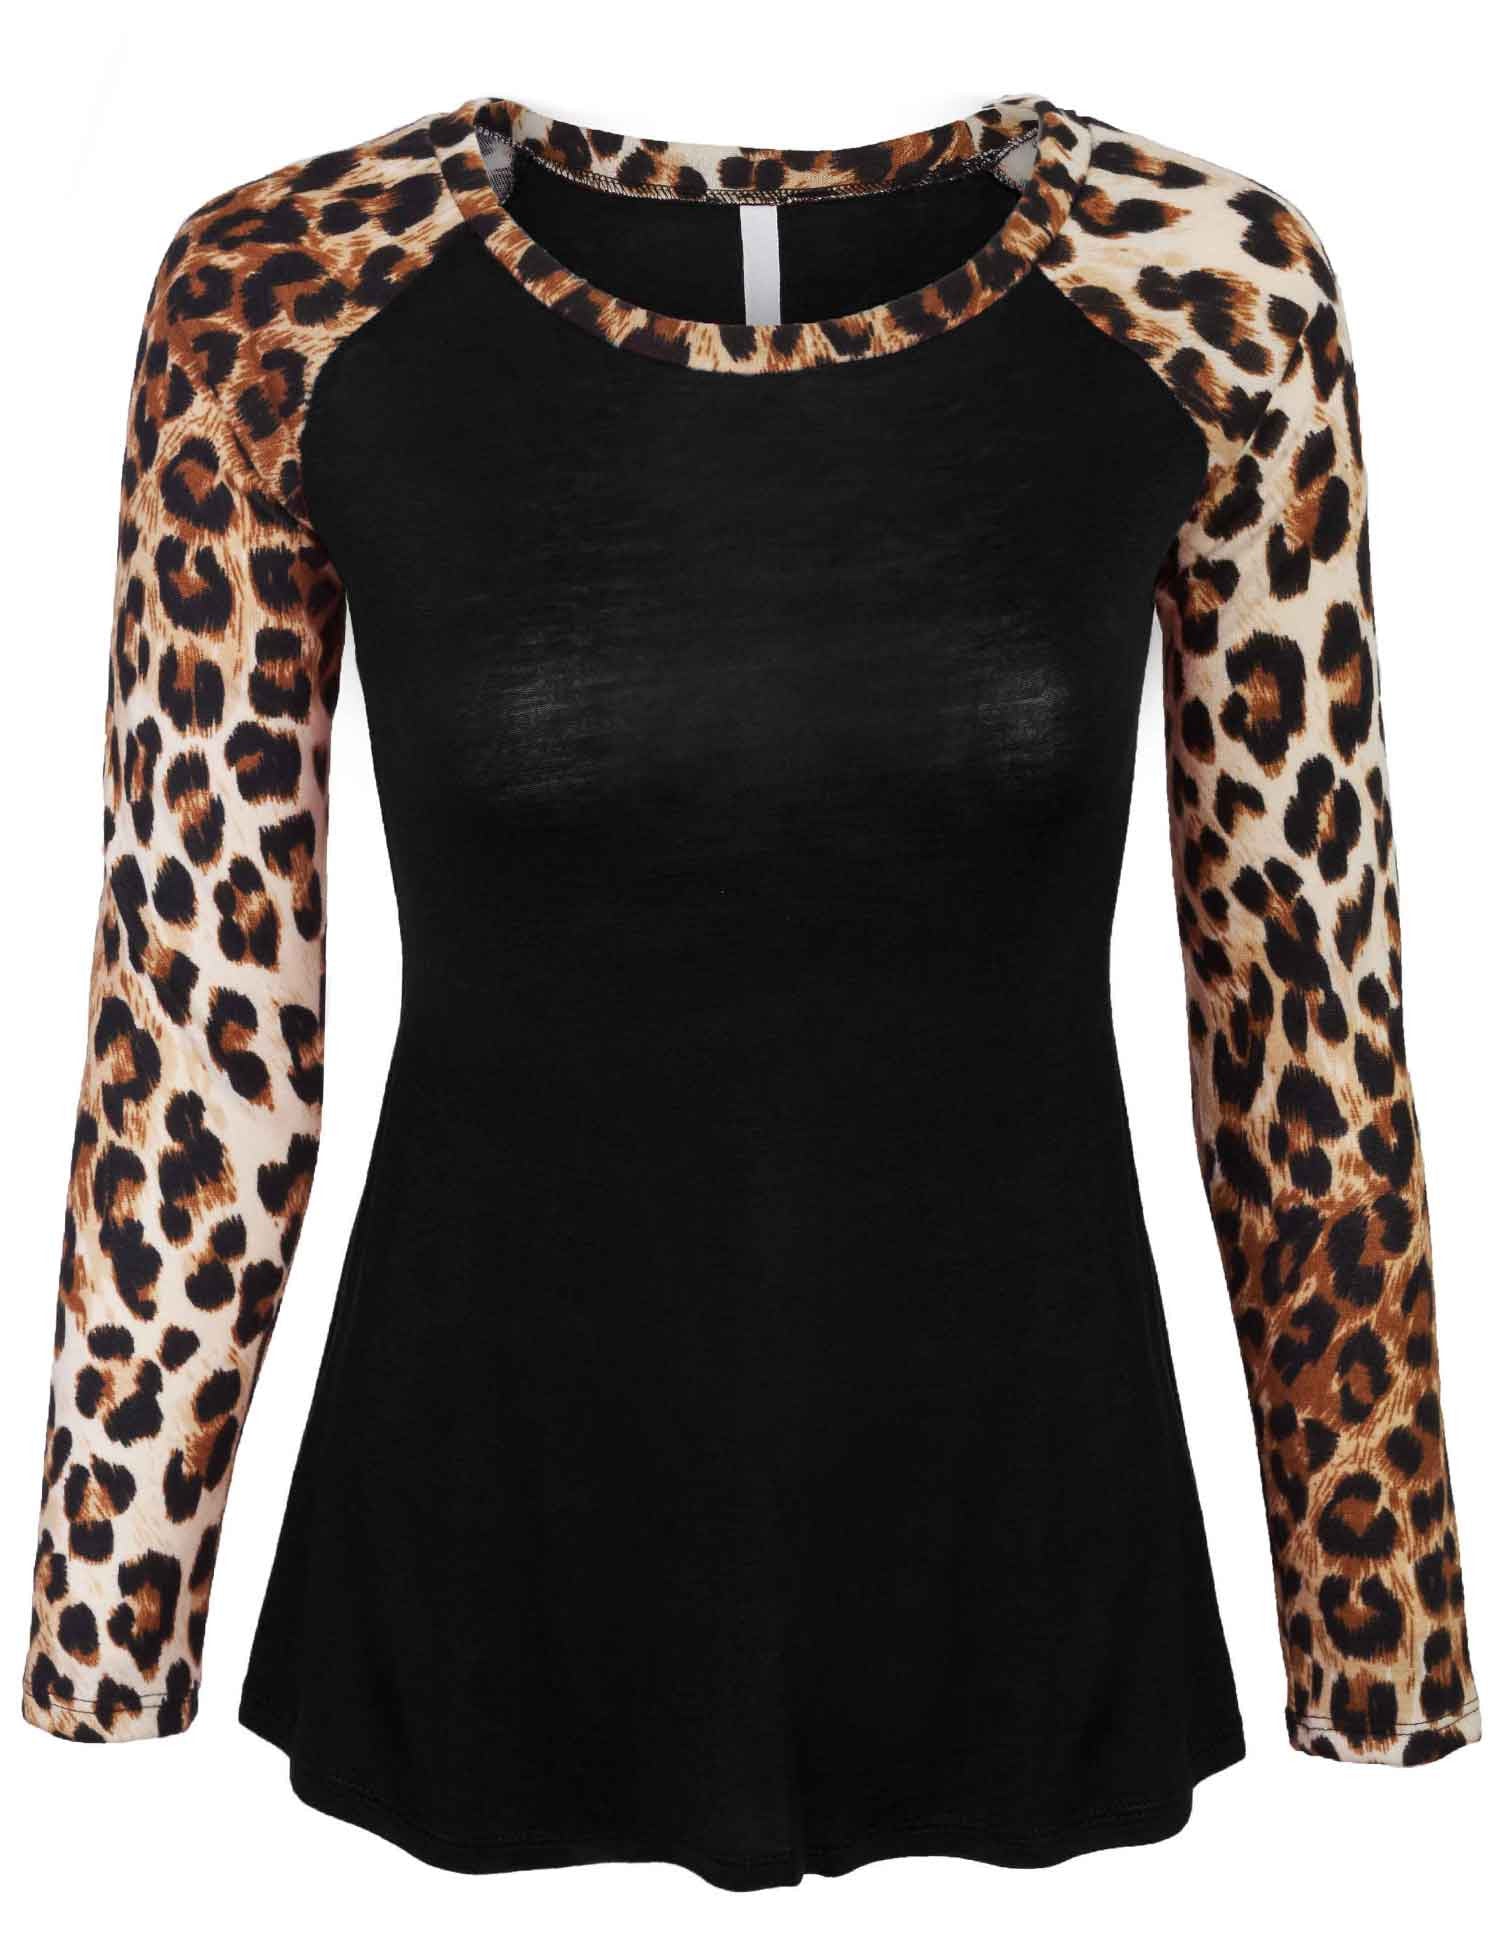 raglan shirt with leopard sleeves